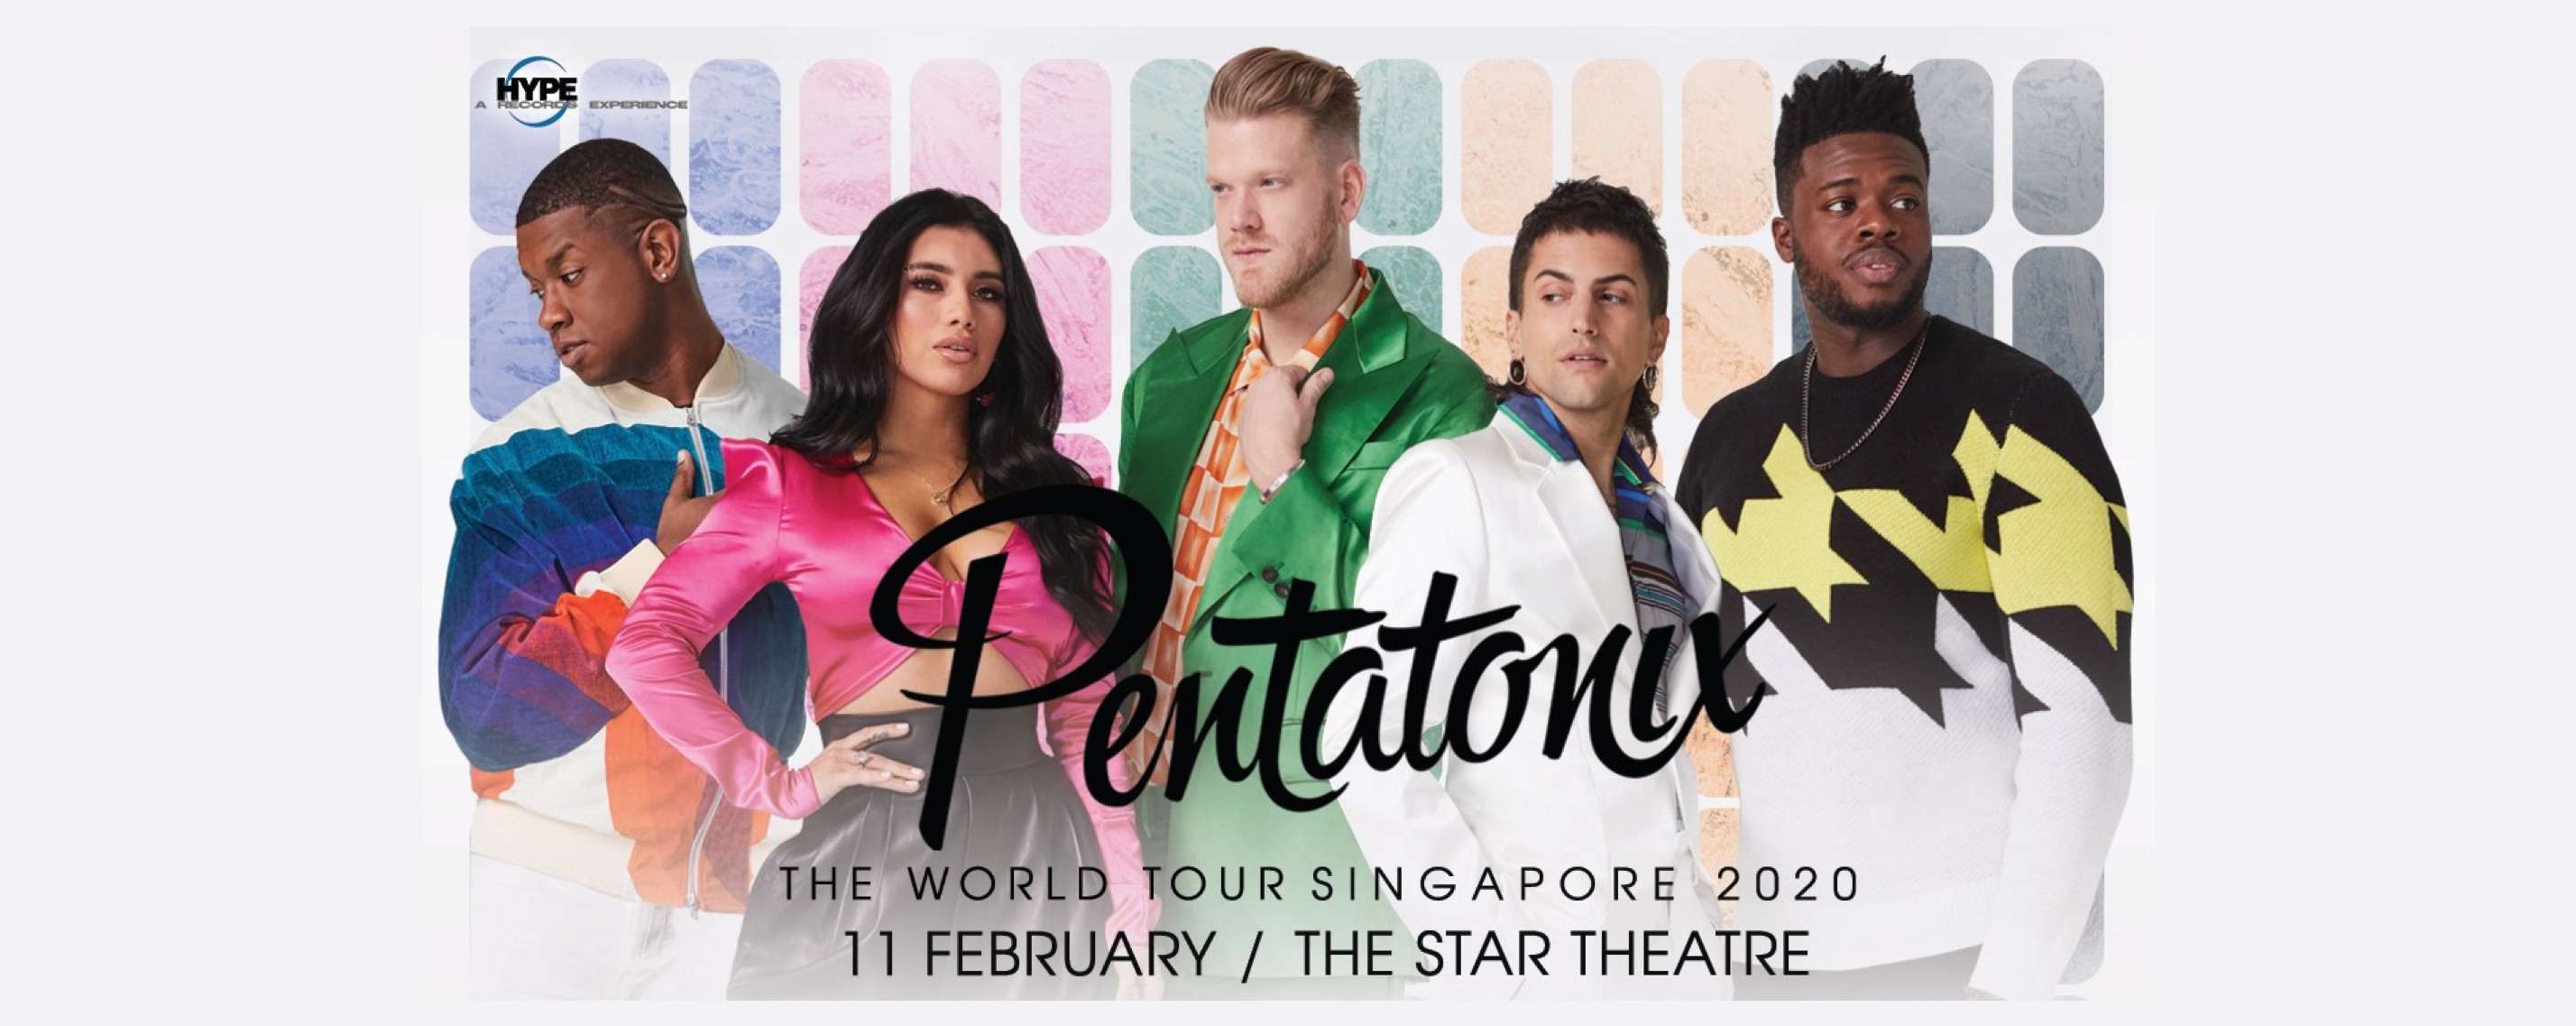 Pentatonix – The World Tour Singapore 2020